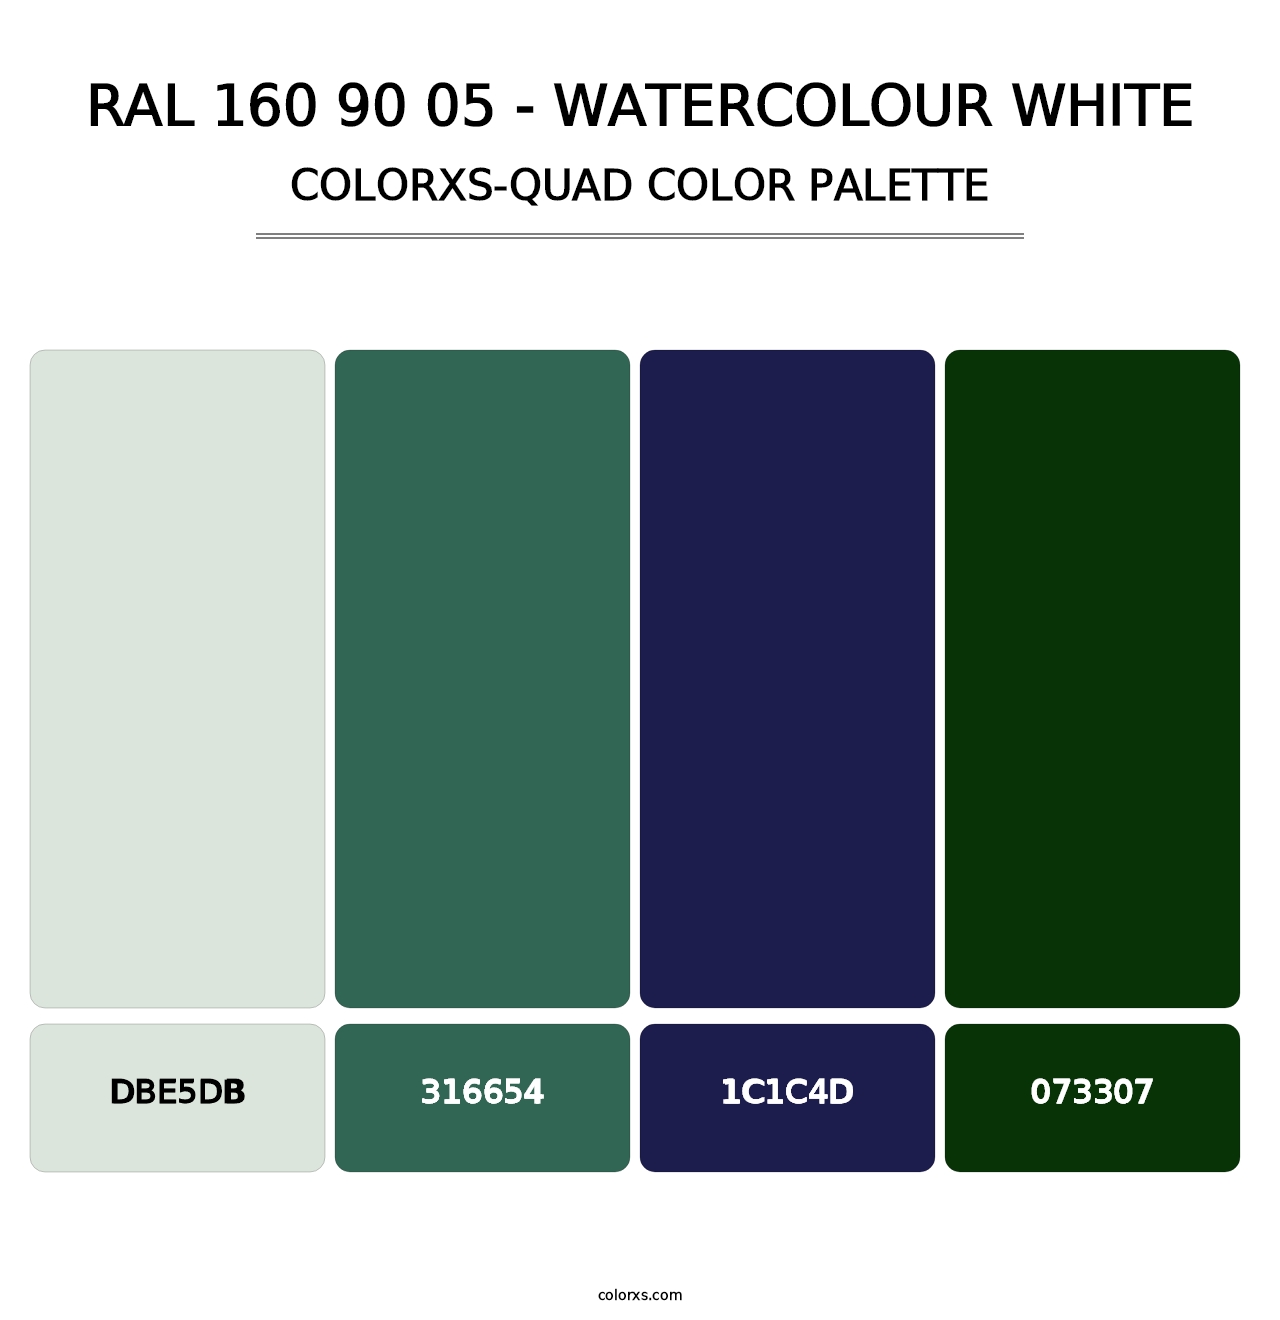 RAL 160 90 05 - Watercolour White - Colorxs Quad Palette